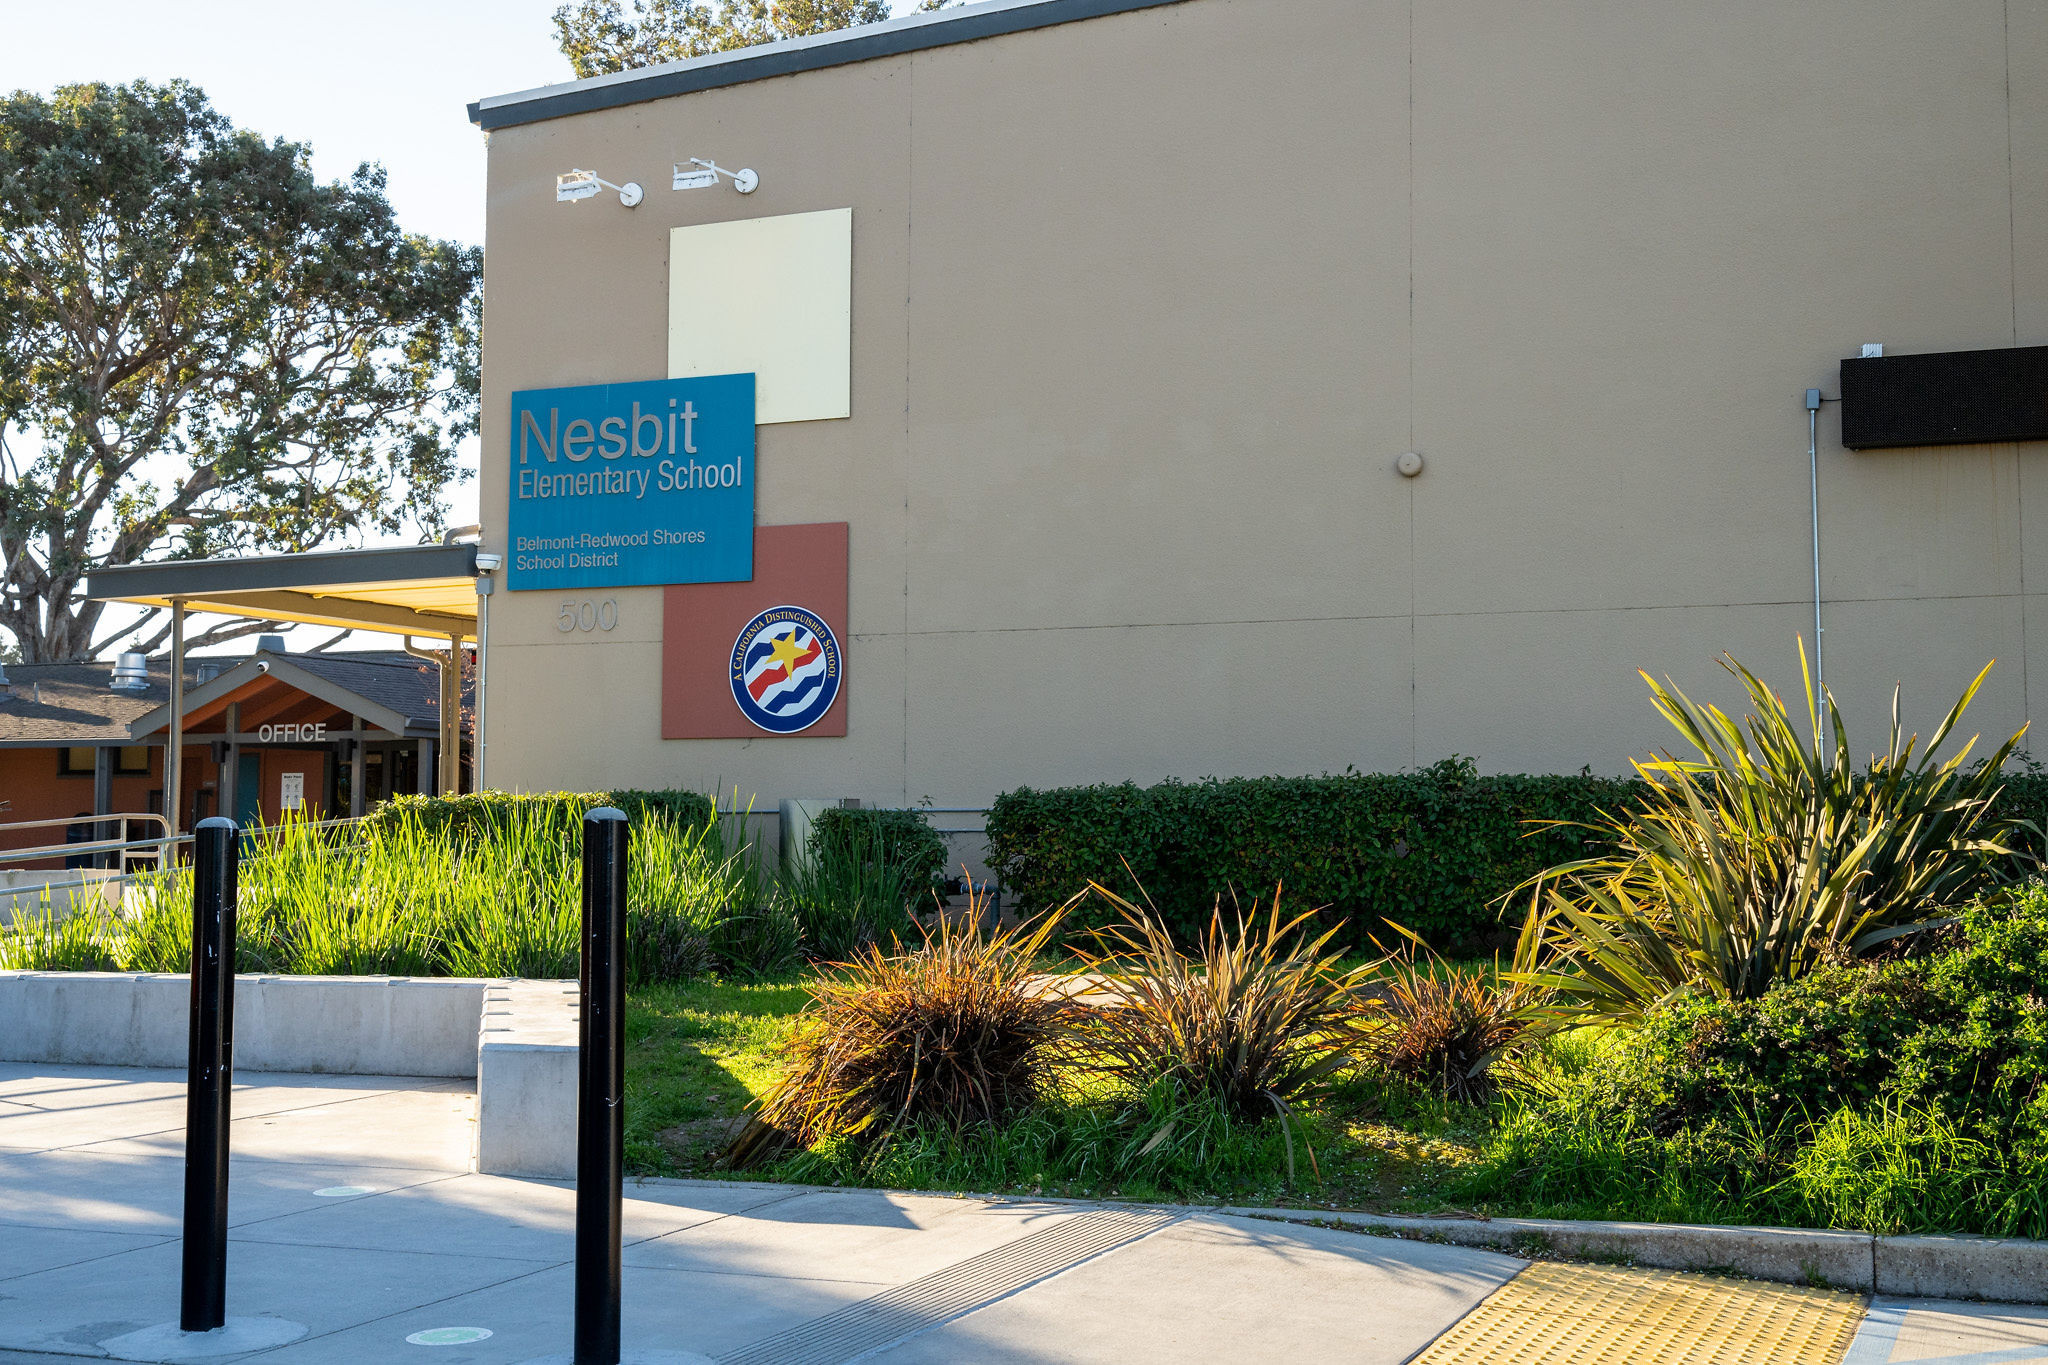 Nesbit Elementary School in Homeview.